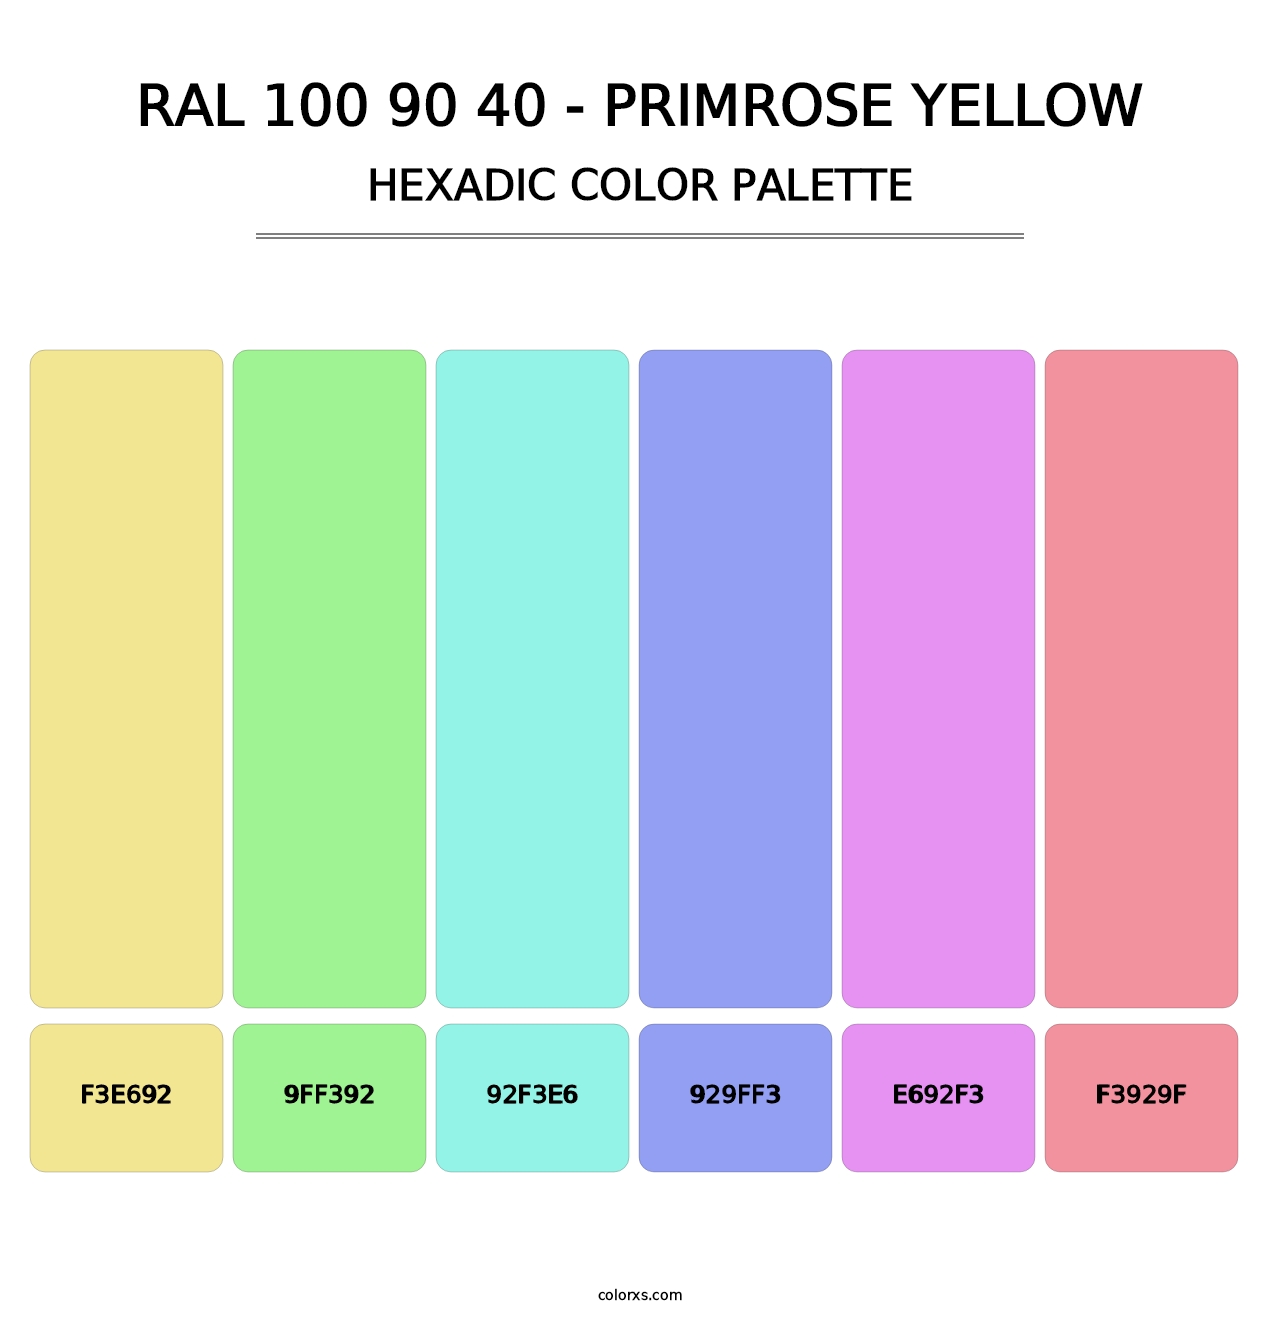 RAL 100 90 40 - Primrose Yellow - Hexadic Color Palette